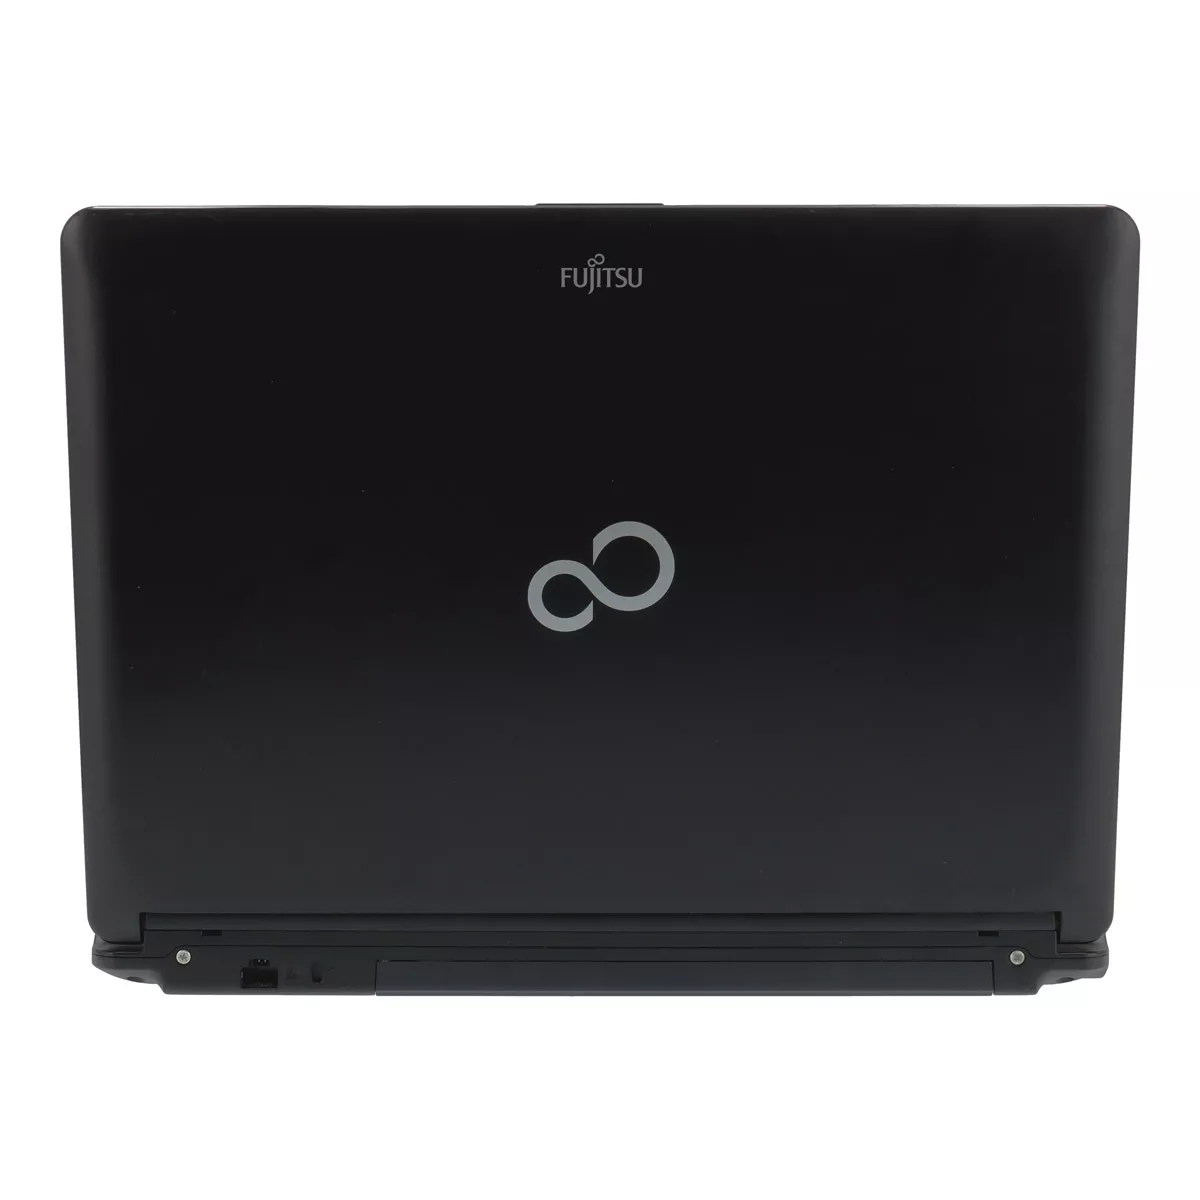 Fujitsu Lifebook S710 Core i5 520M 2,40 GHz